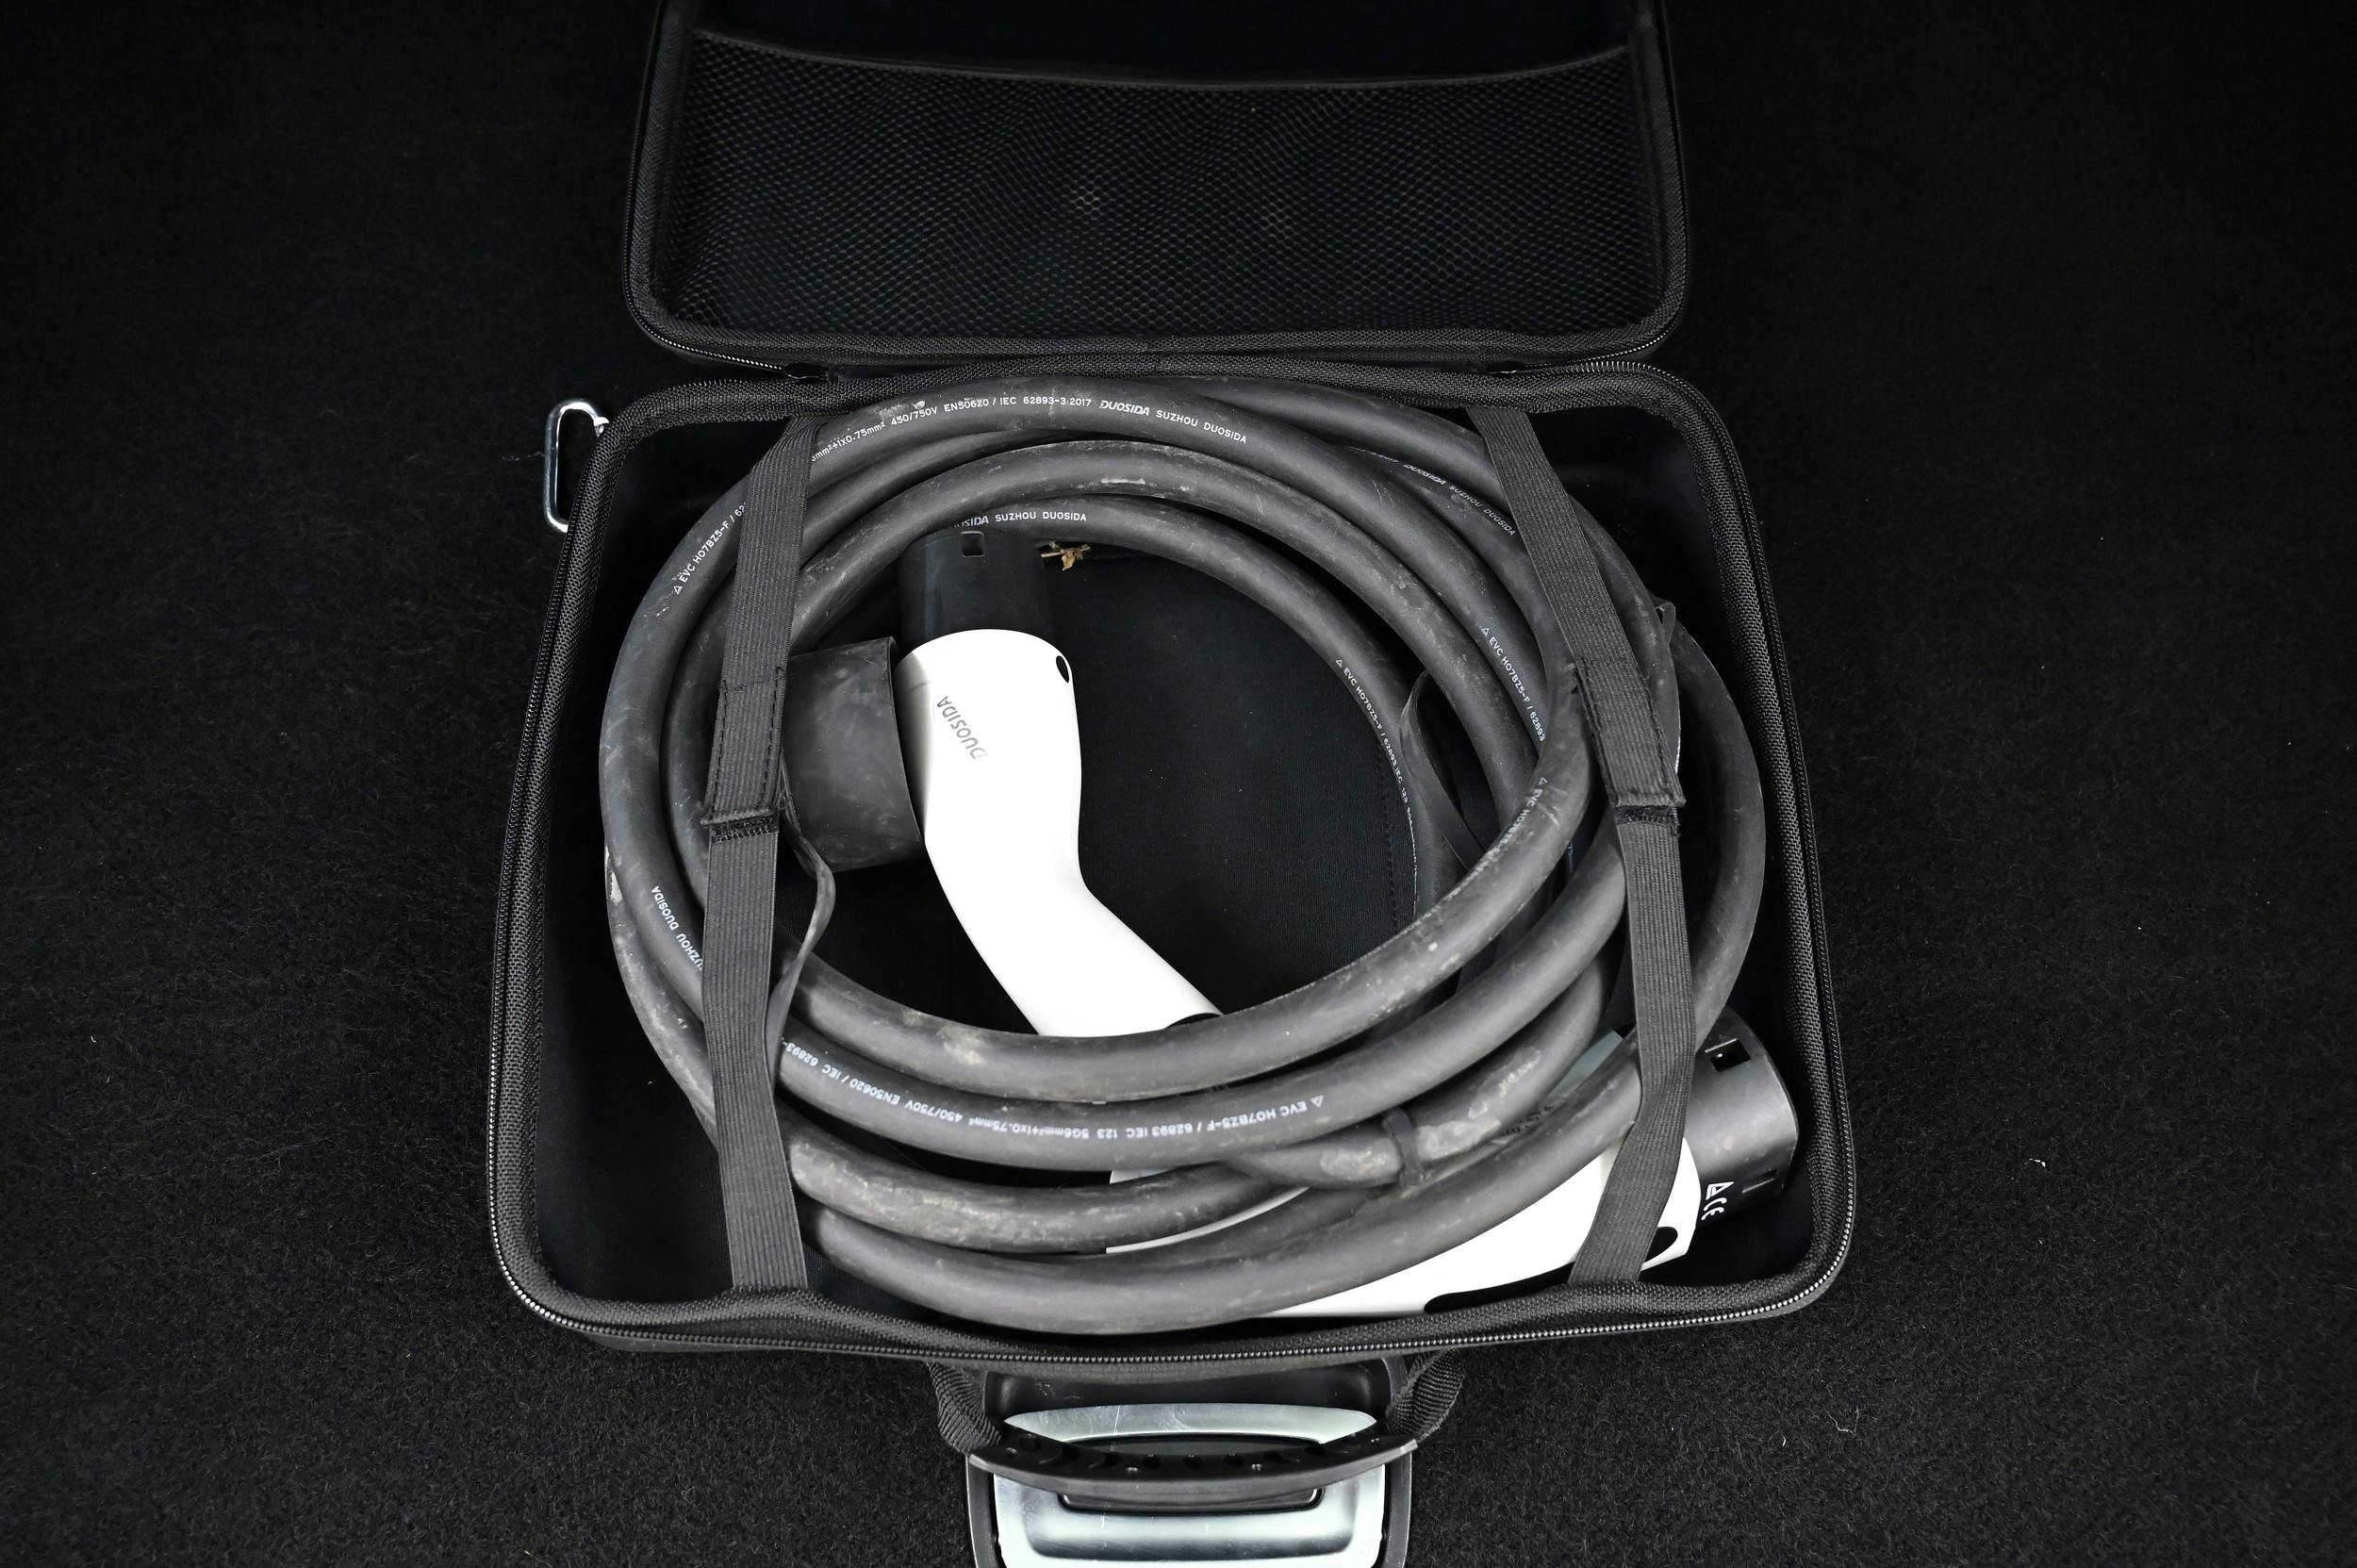 En laddkabel med Typ 2-kontakt - för laddning i laddstolpe/laddbox